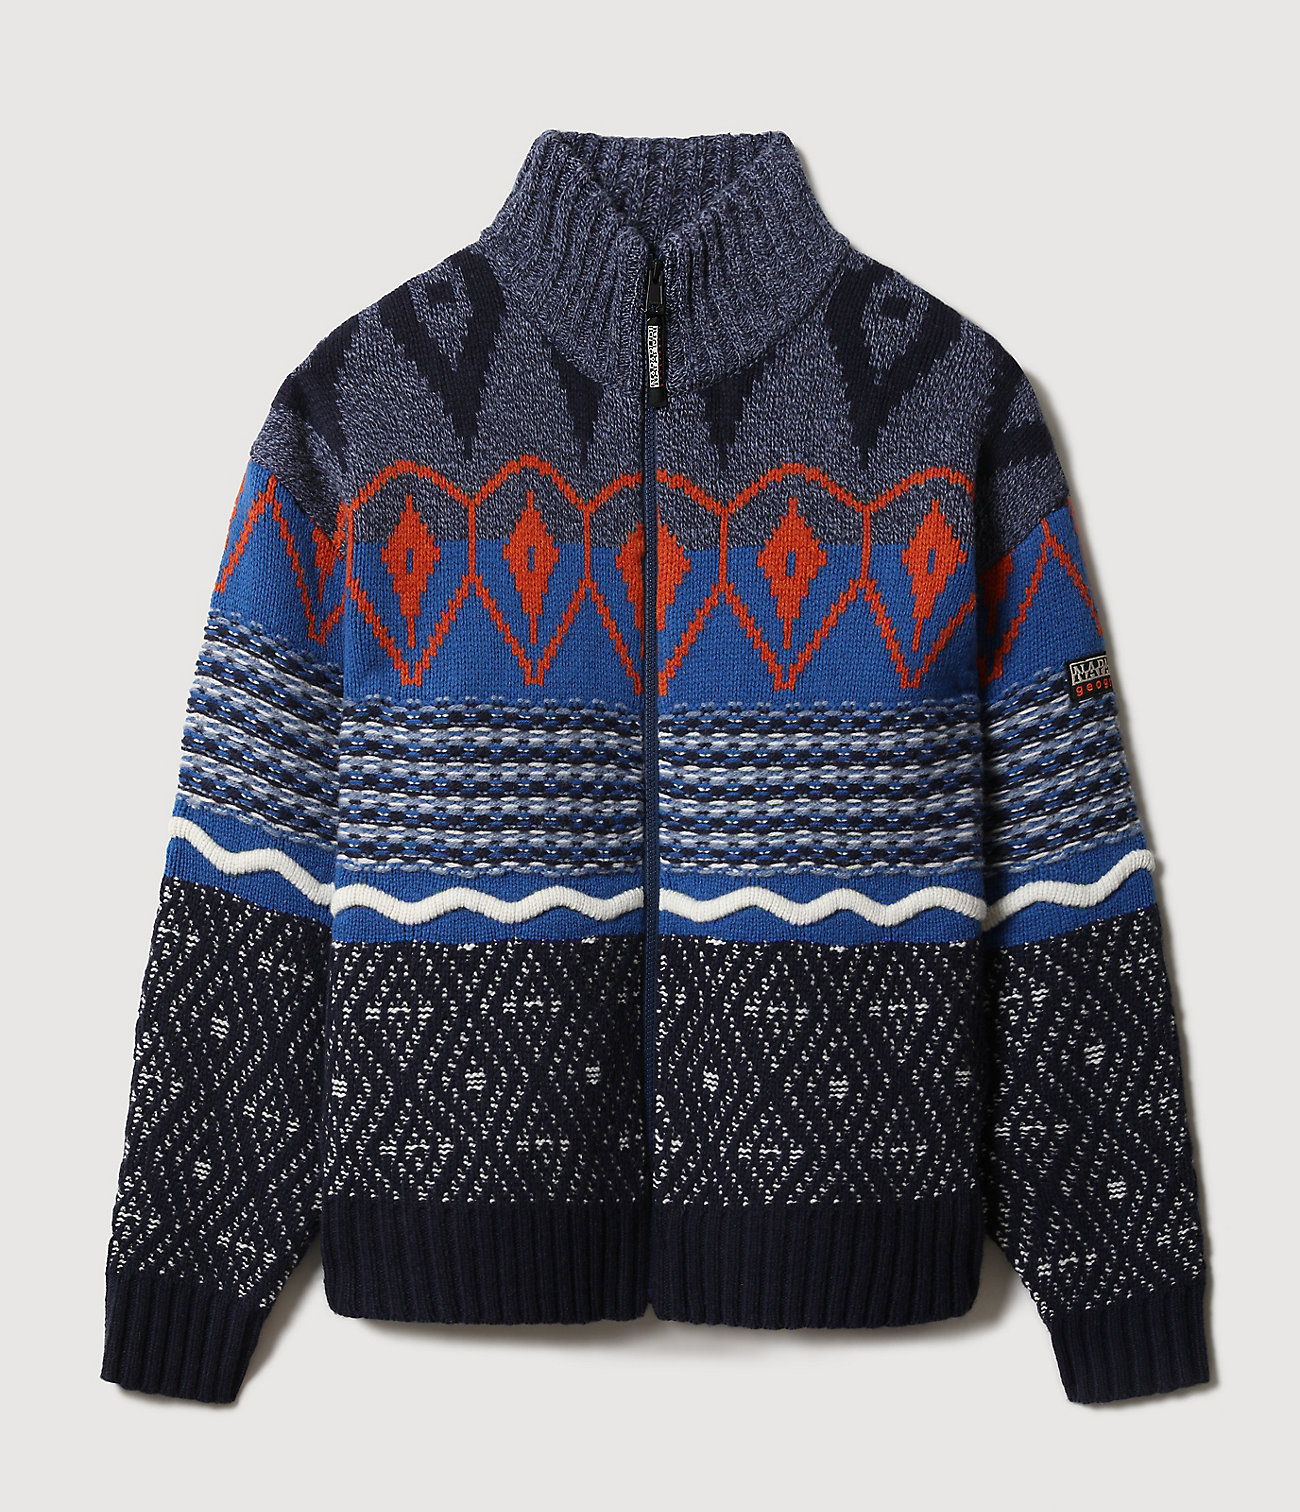 Cozy lined cardigan, wool jacket, Nepal jacket - model 8